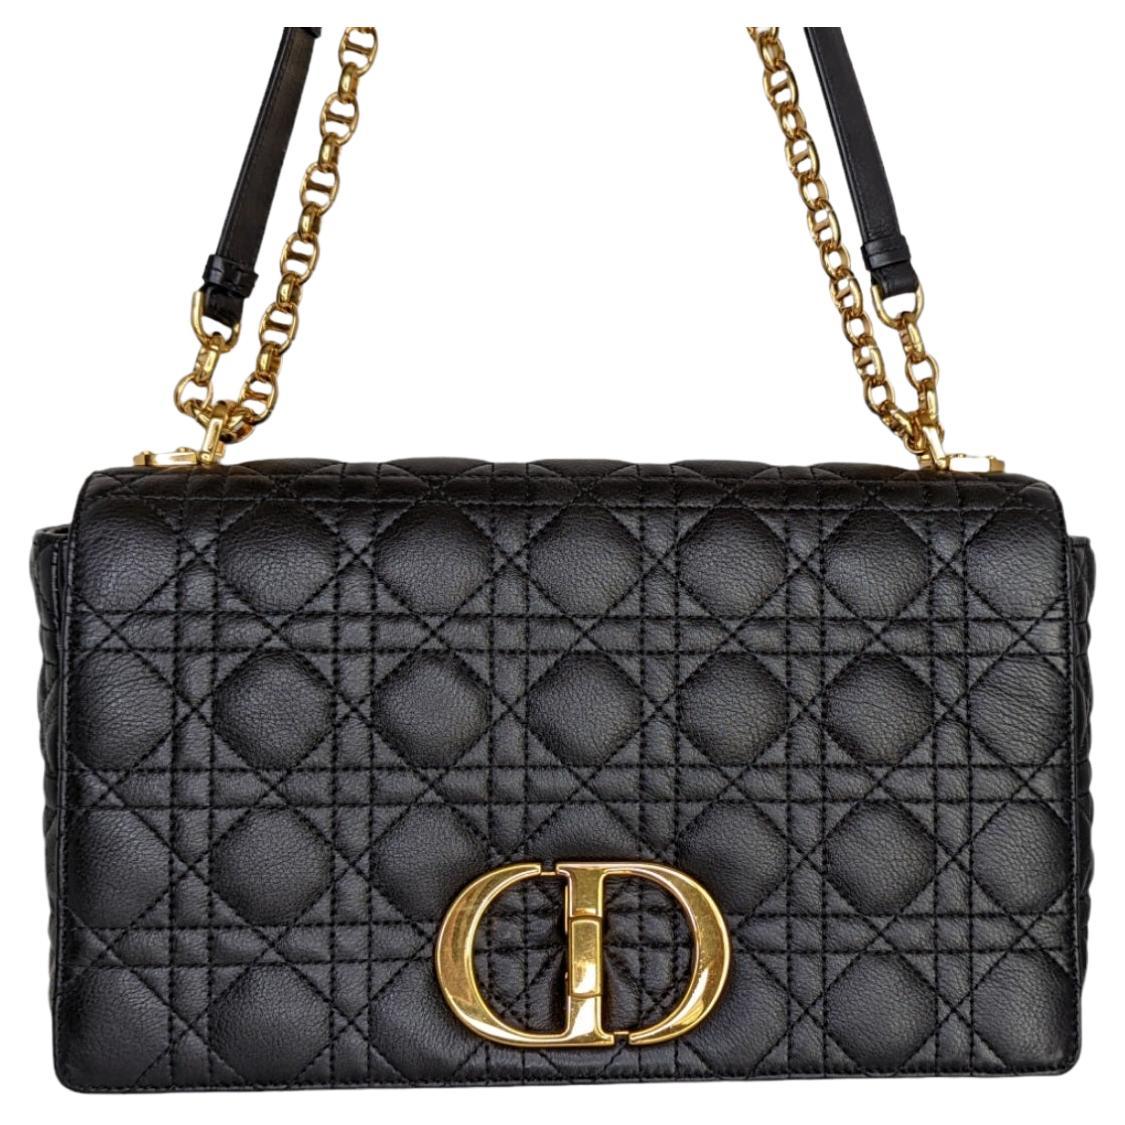 Christian Dior Black Supple Cannage Calfskin Large Caro Bag